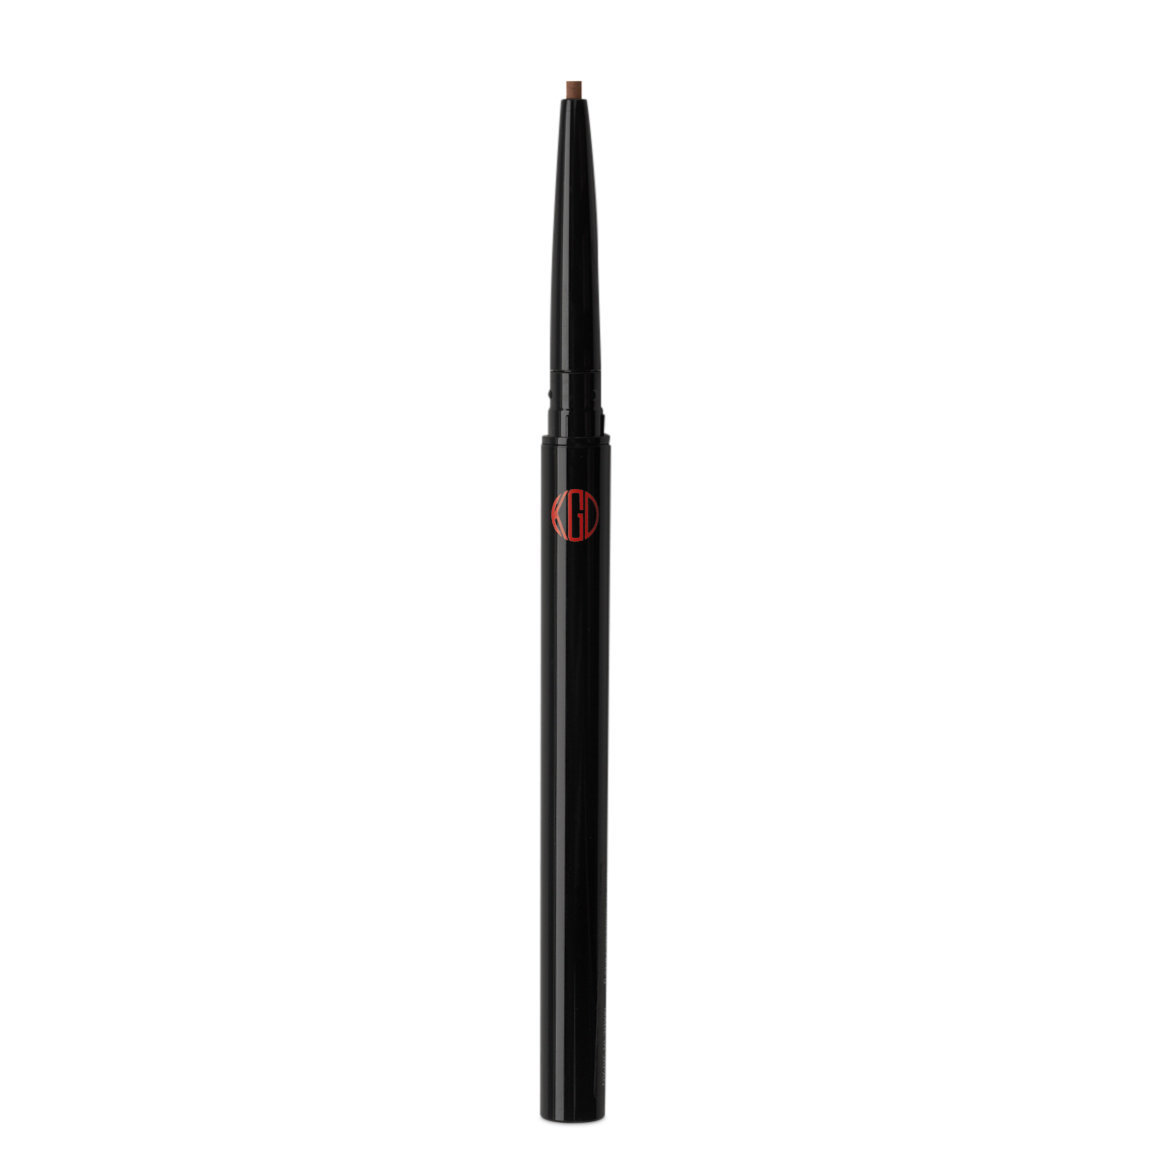 Koh Gen Do Maifanshi Waterproof Mineral Eyeliner Pencil alternative view 1.